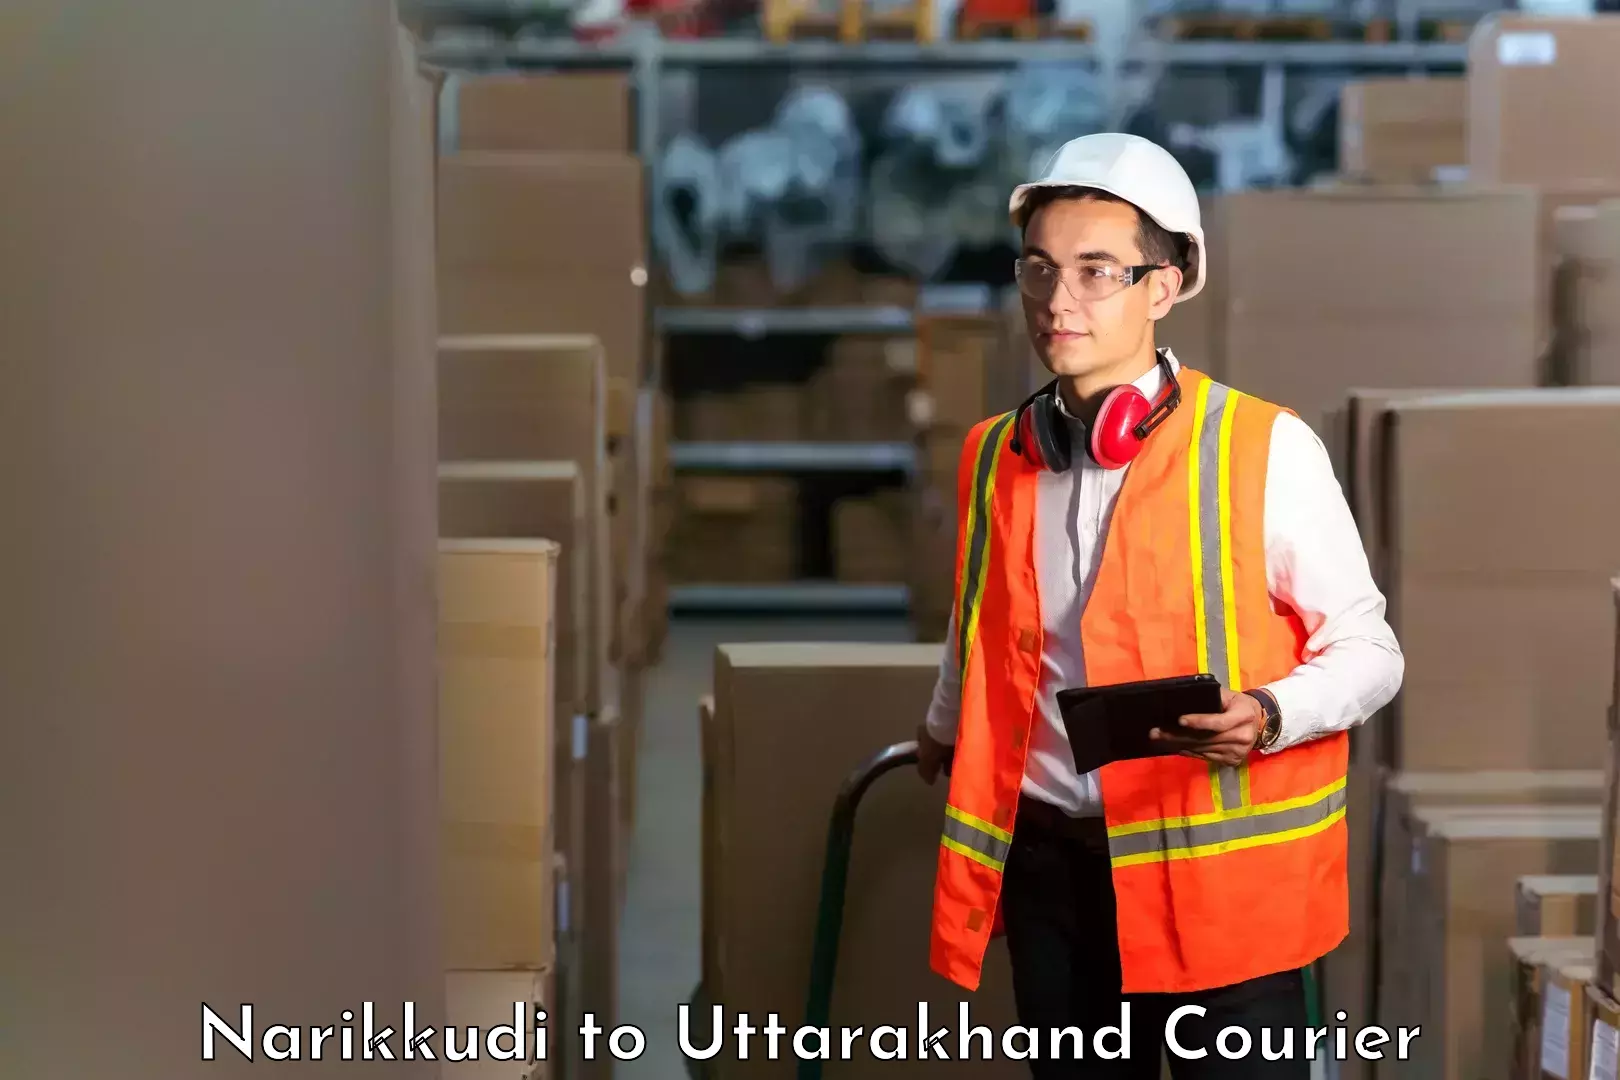 Professional courier handling Narikkudi to Uttarakhand